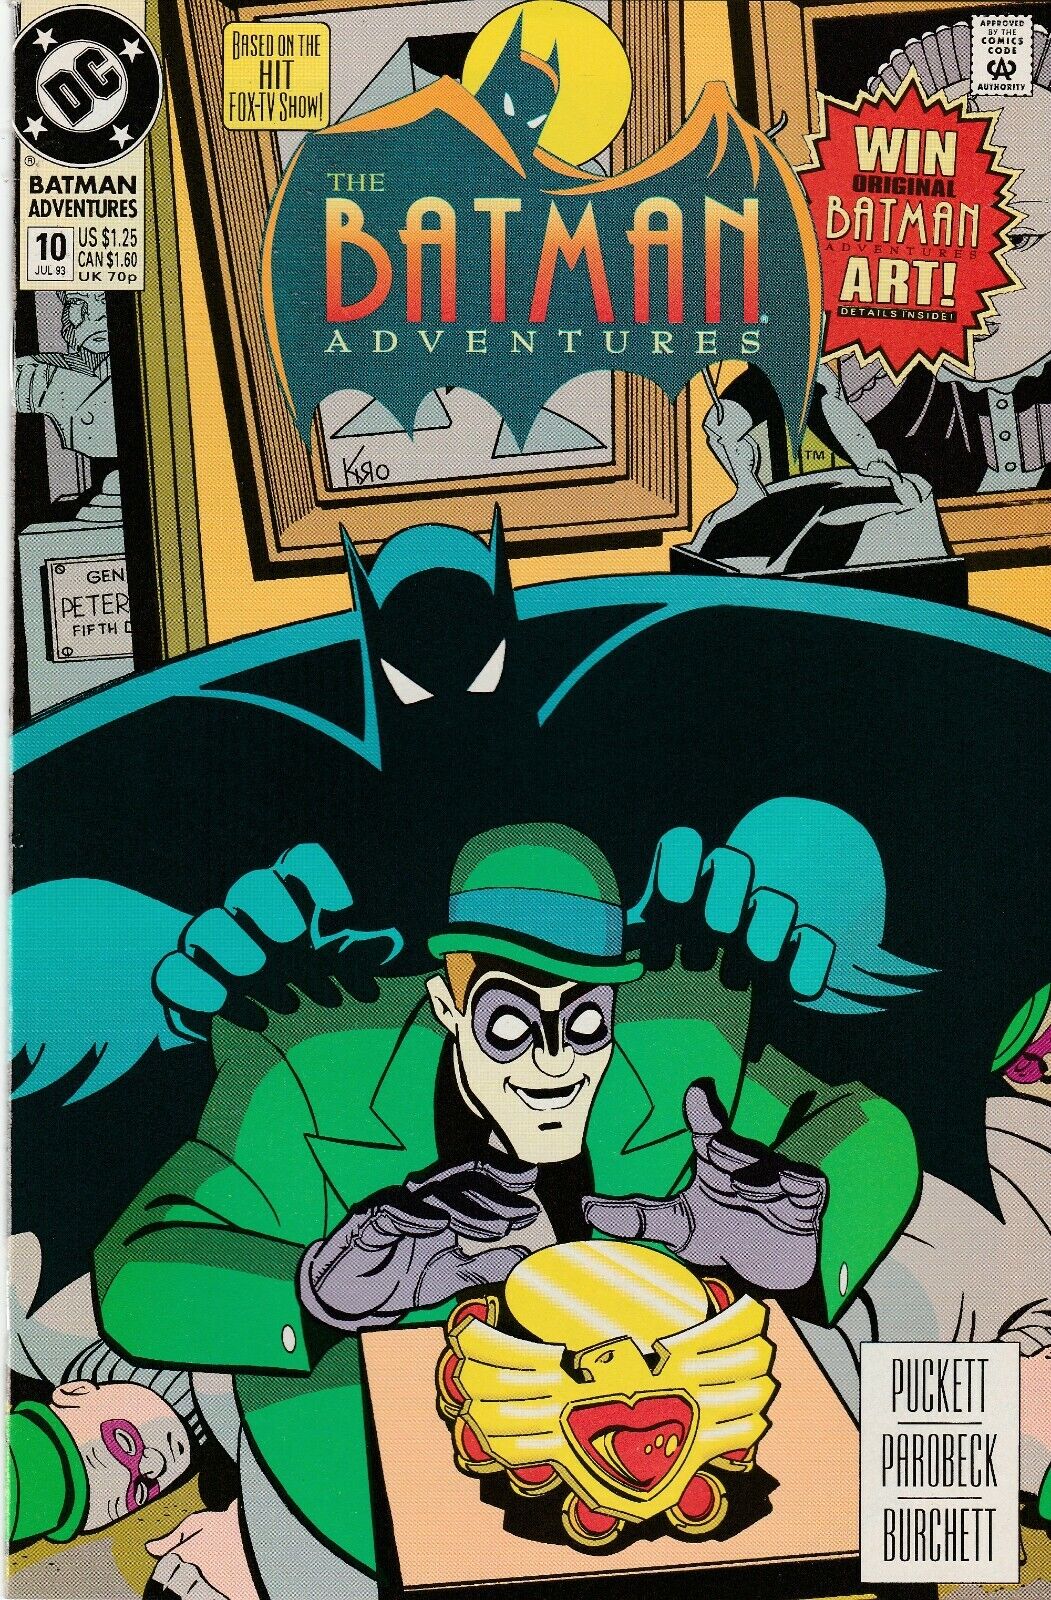 BATMAN ADVENTURES # 10  ANIMATED SERIES 4 1992 MIKE PAROBECK .99 AUCTION 12